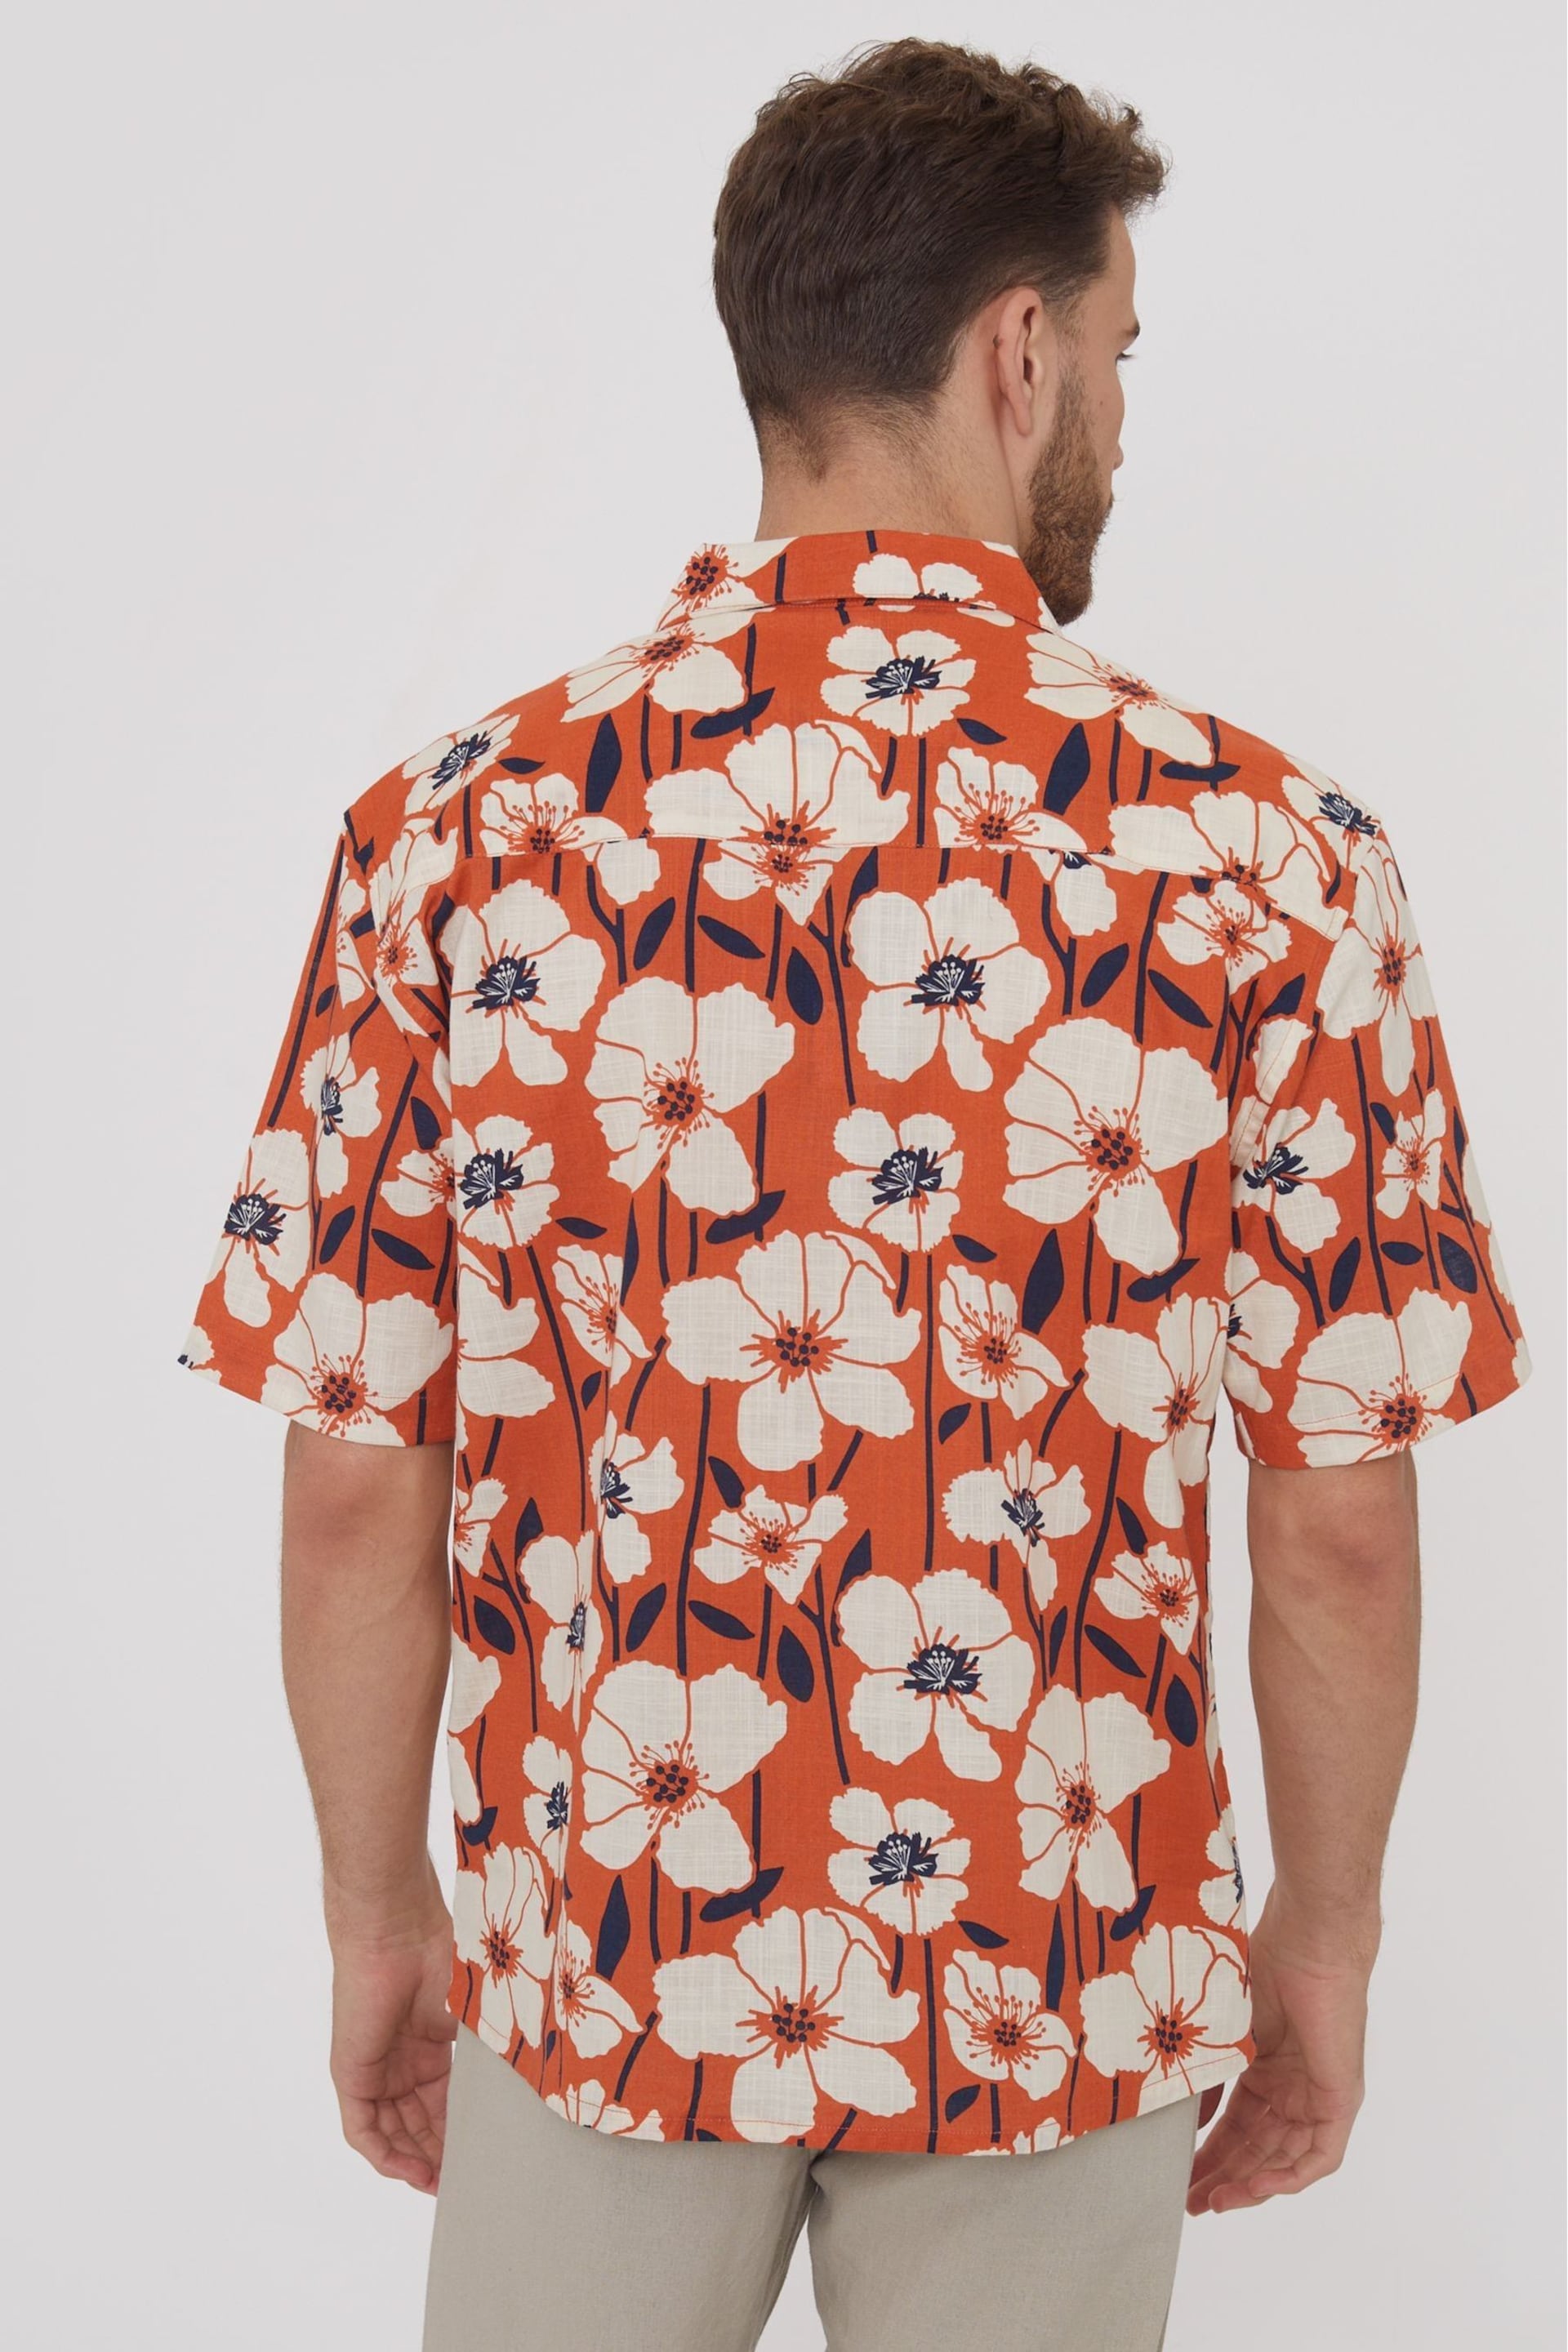 Threadbare Orange Short Sleeve Floral Print Cotton Shirt - Image 3 of 5